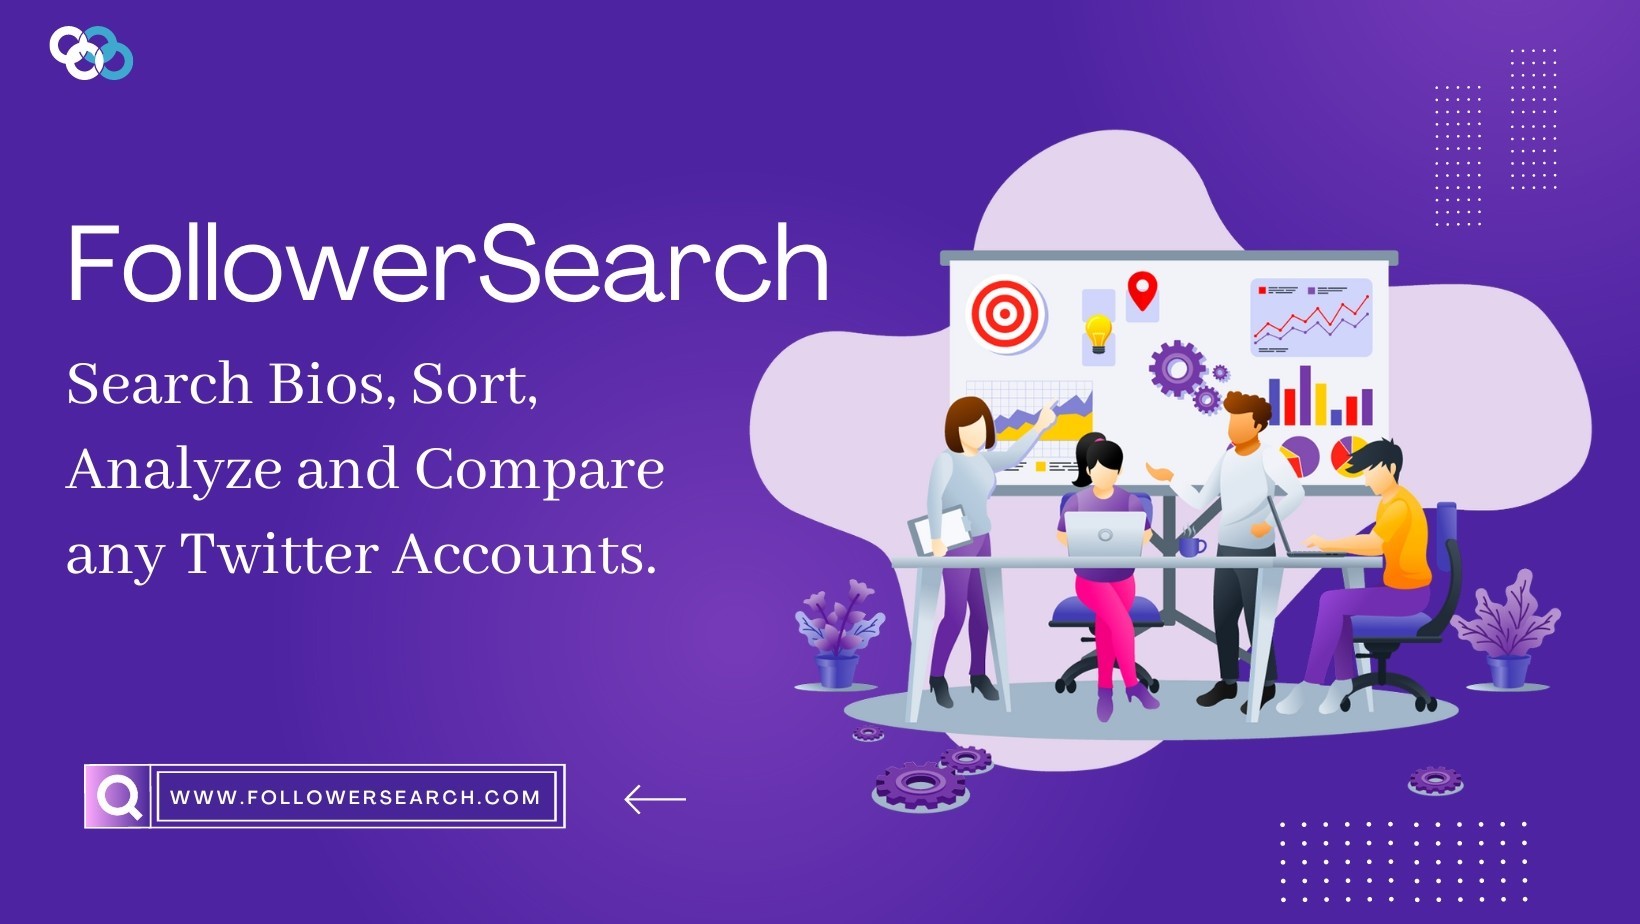 FollowerSearch - A Twitter Analytics Tool